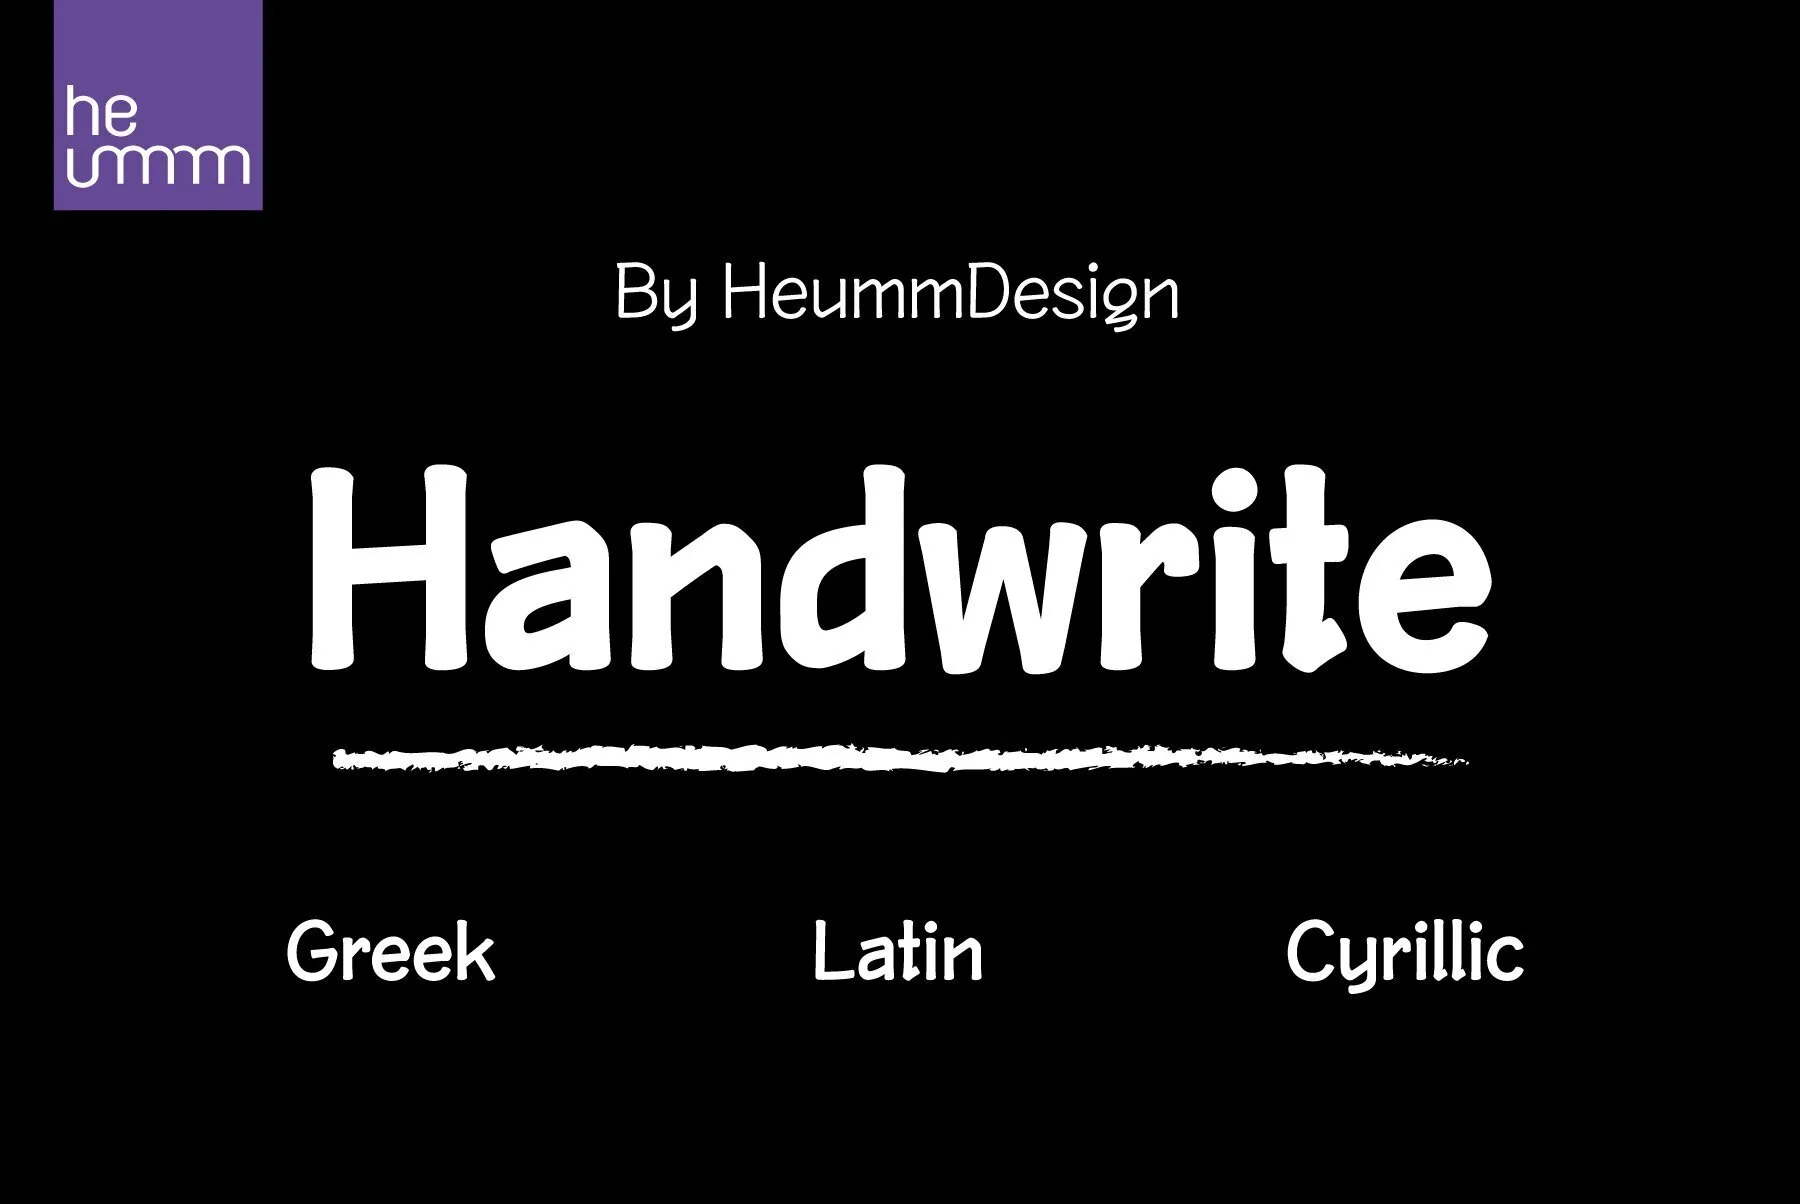 HU Handwrite